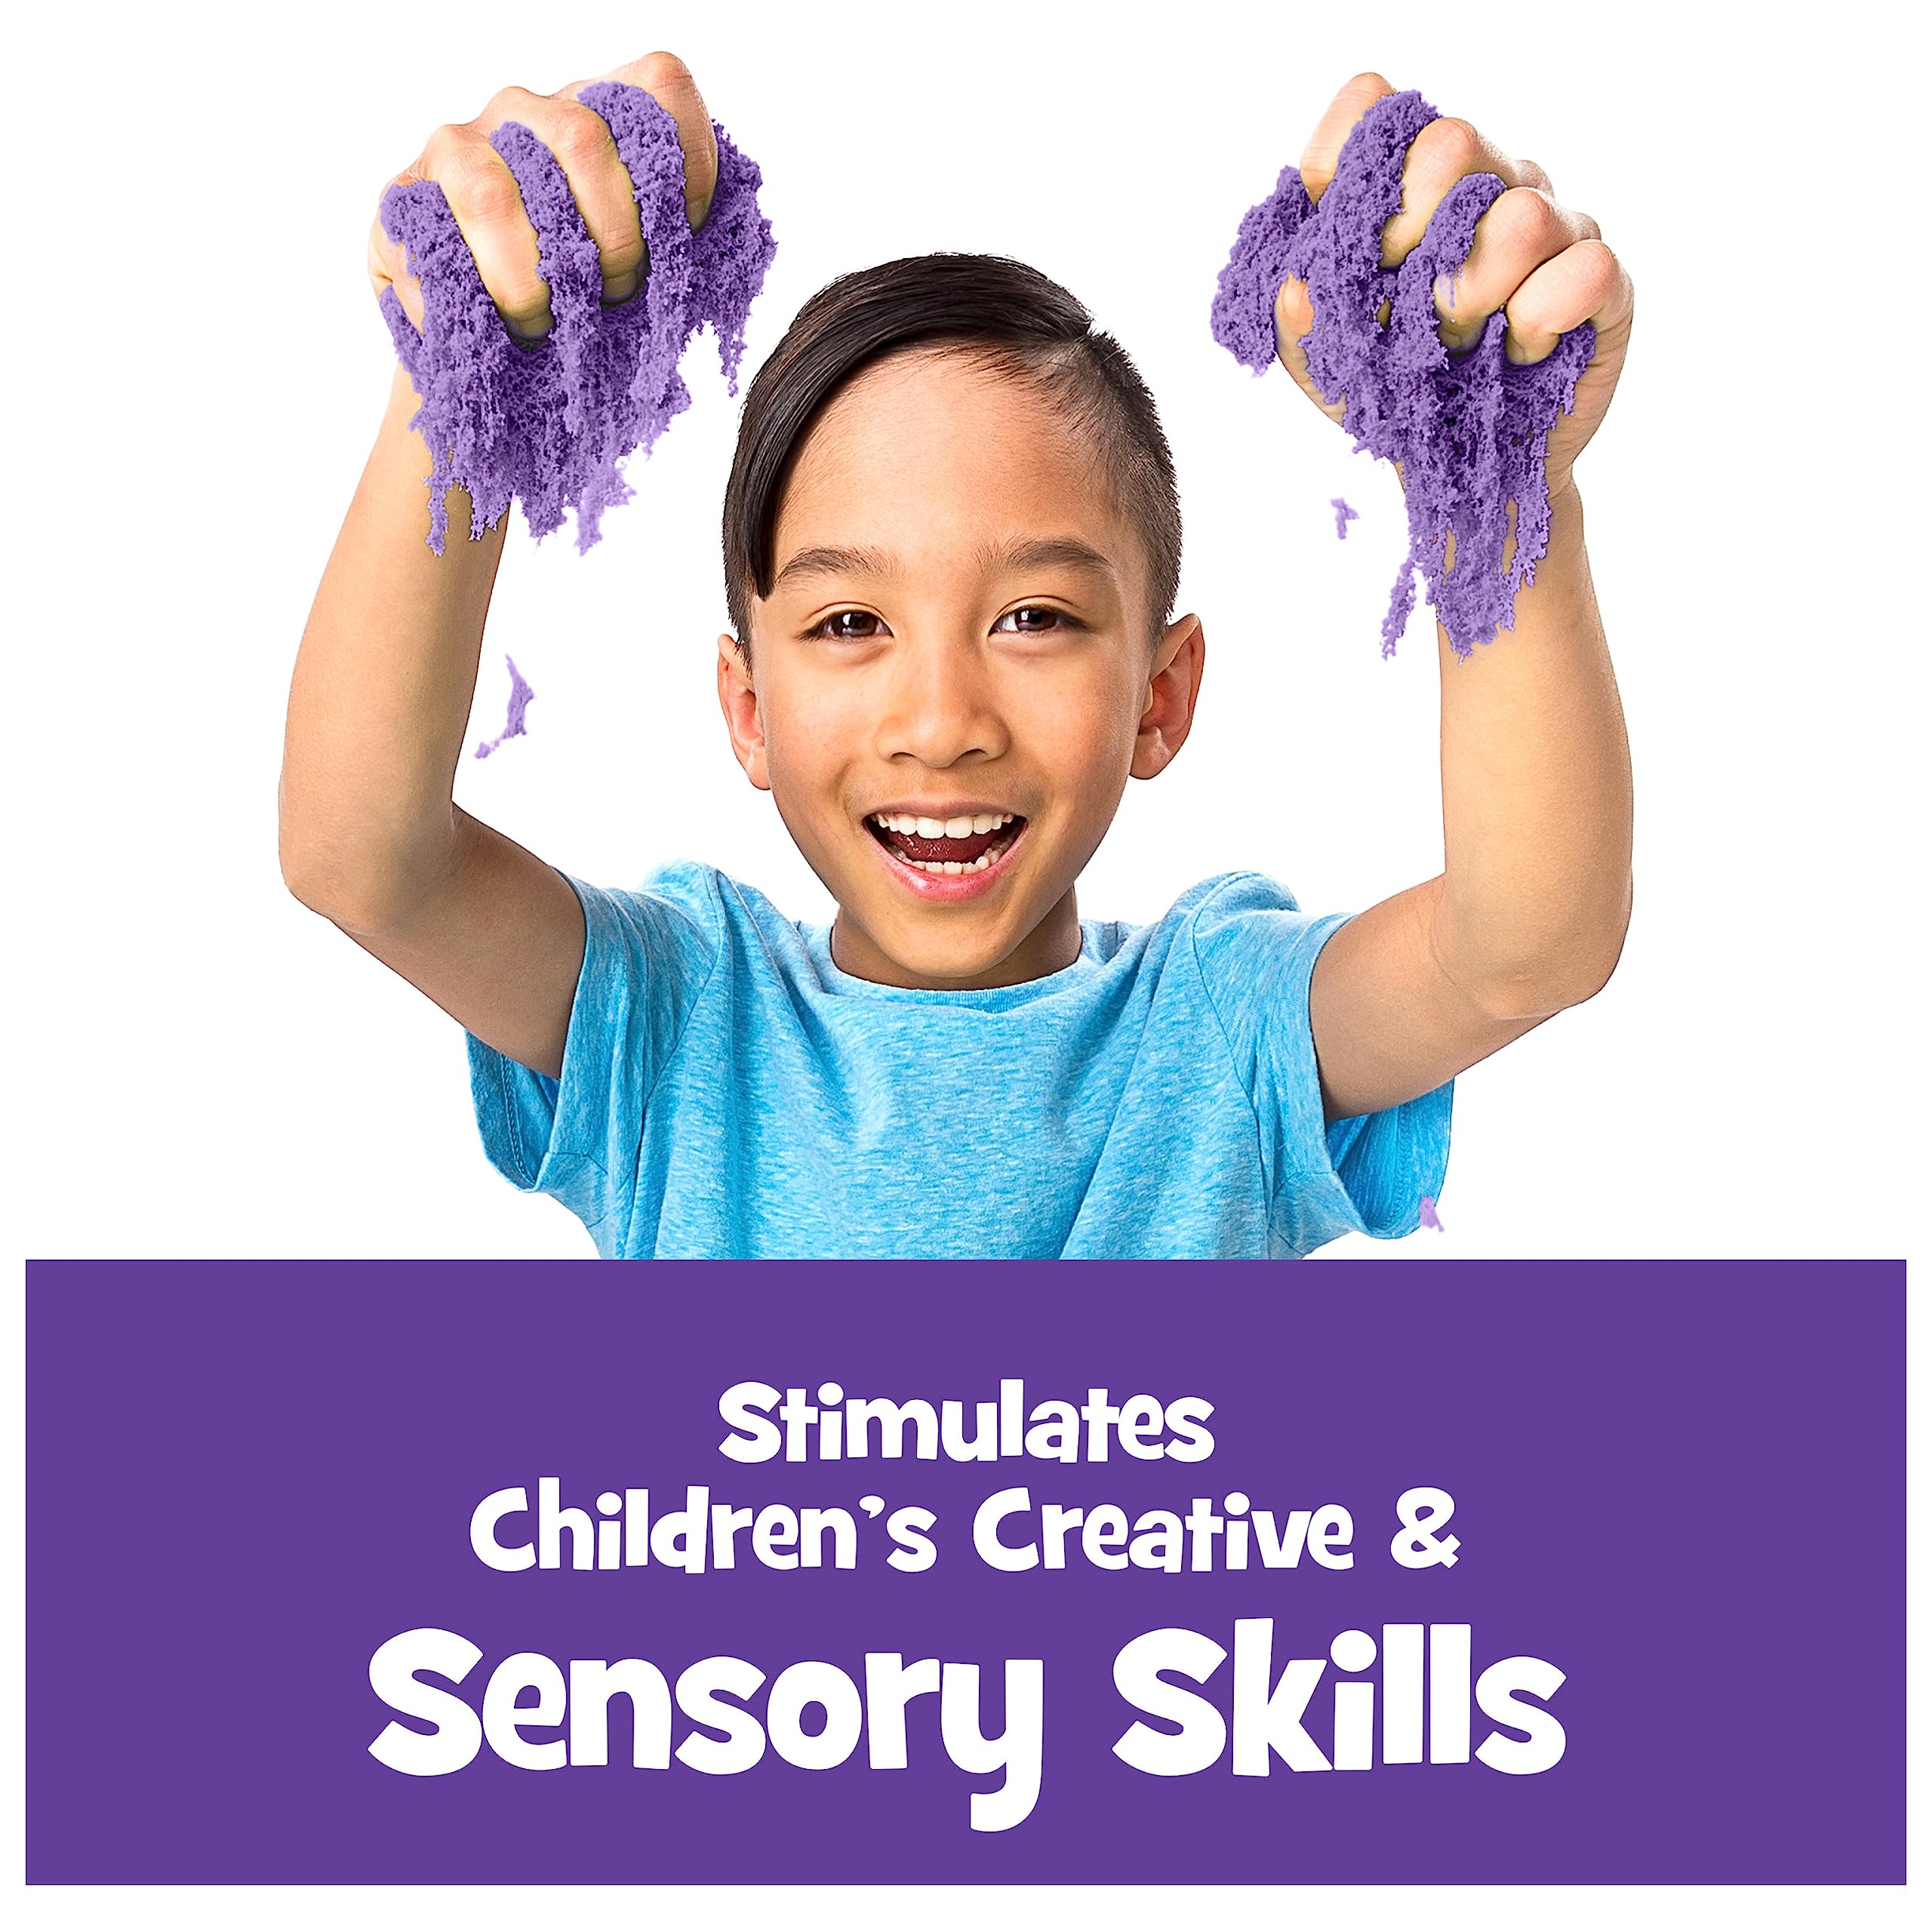 Kinetic Sand, The Original Moldable Sensory Play Sand Toys for Kids, Purple, 2 lb. Resealable Bag, Ages 3+